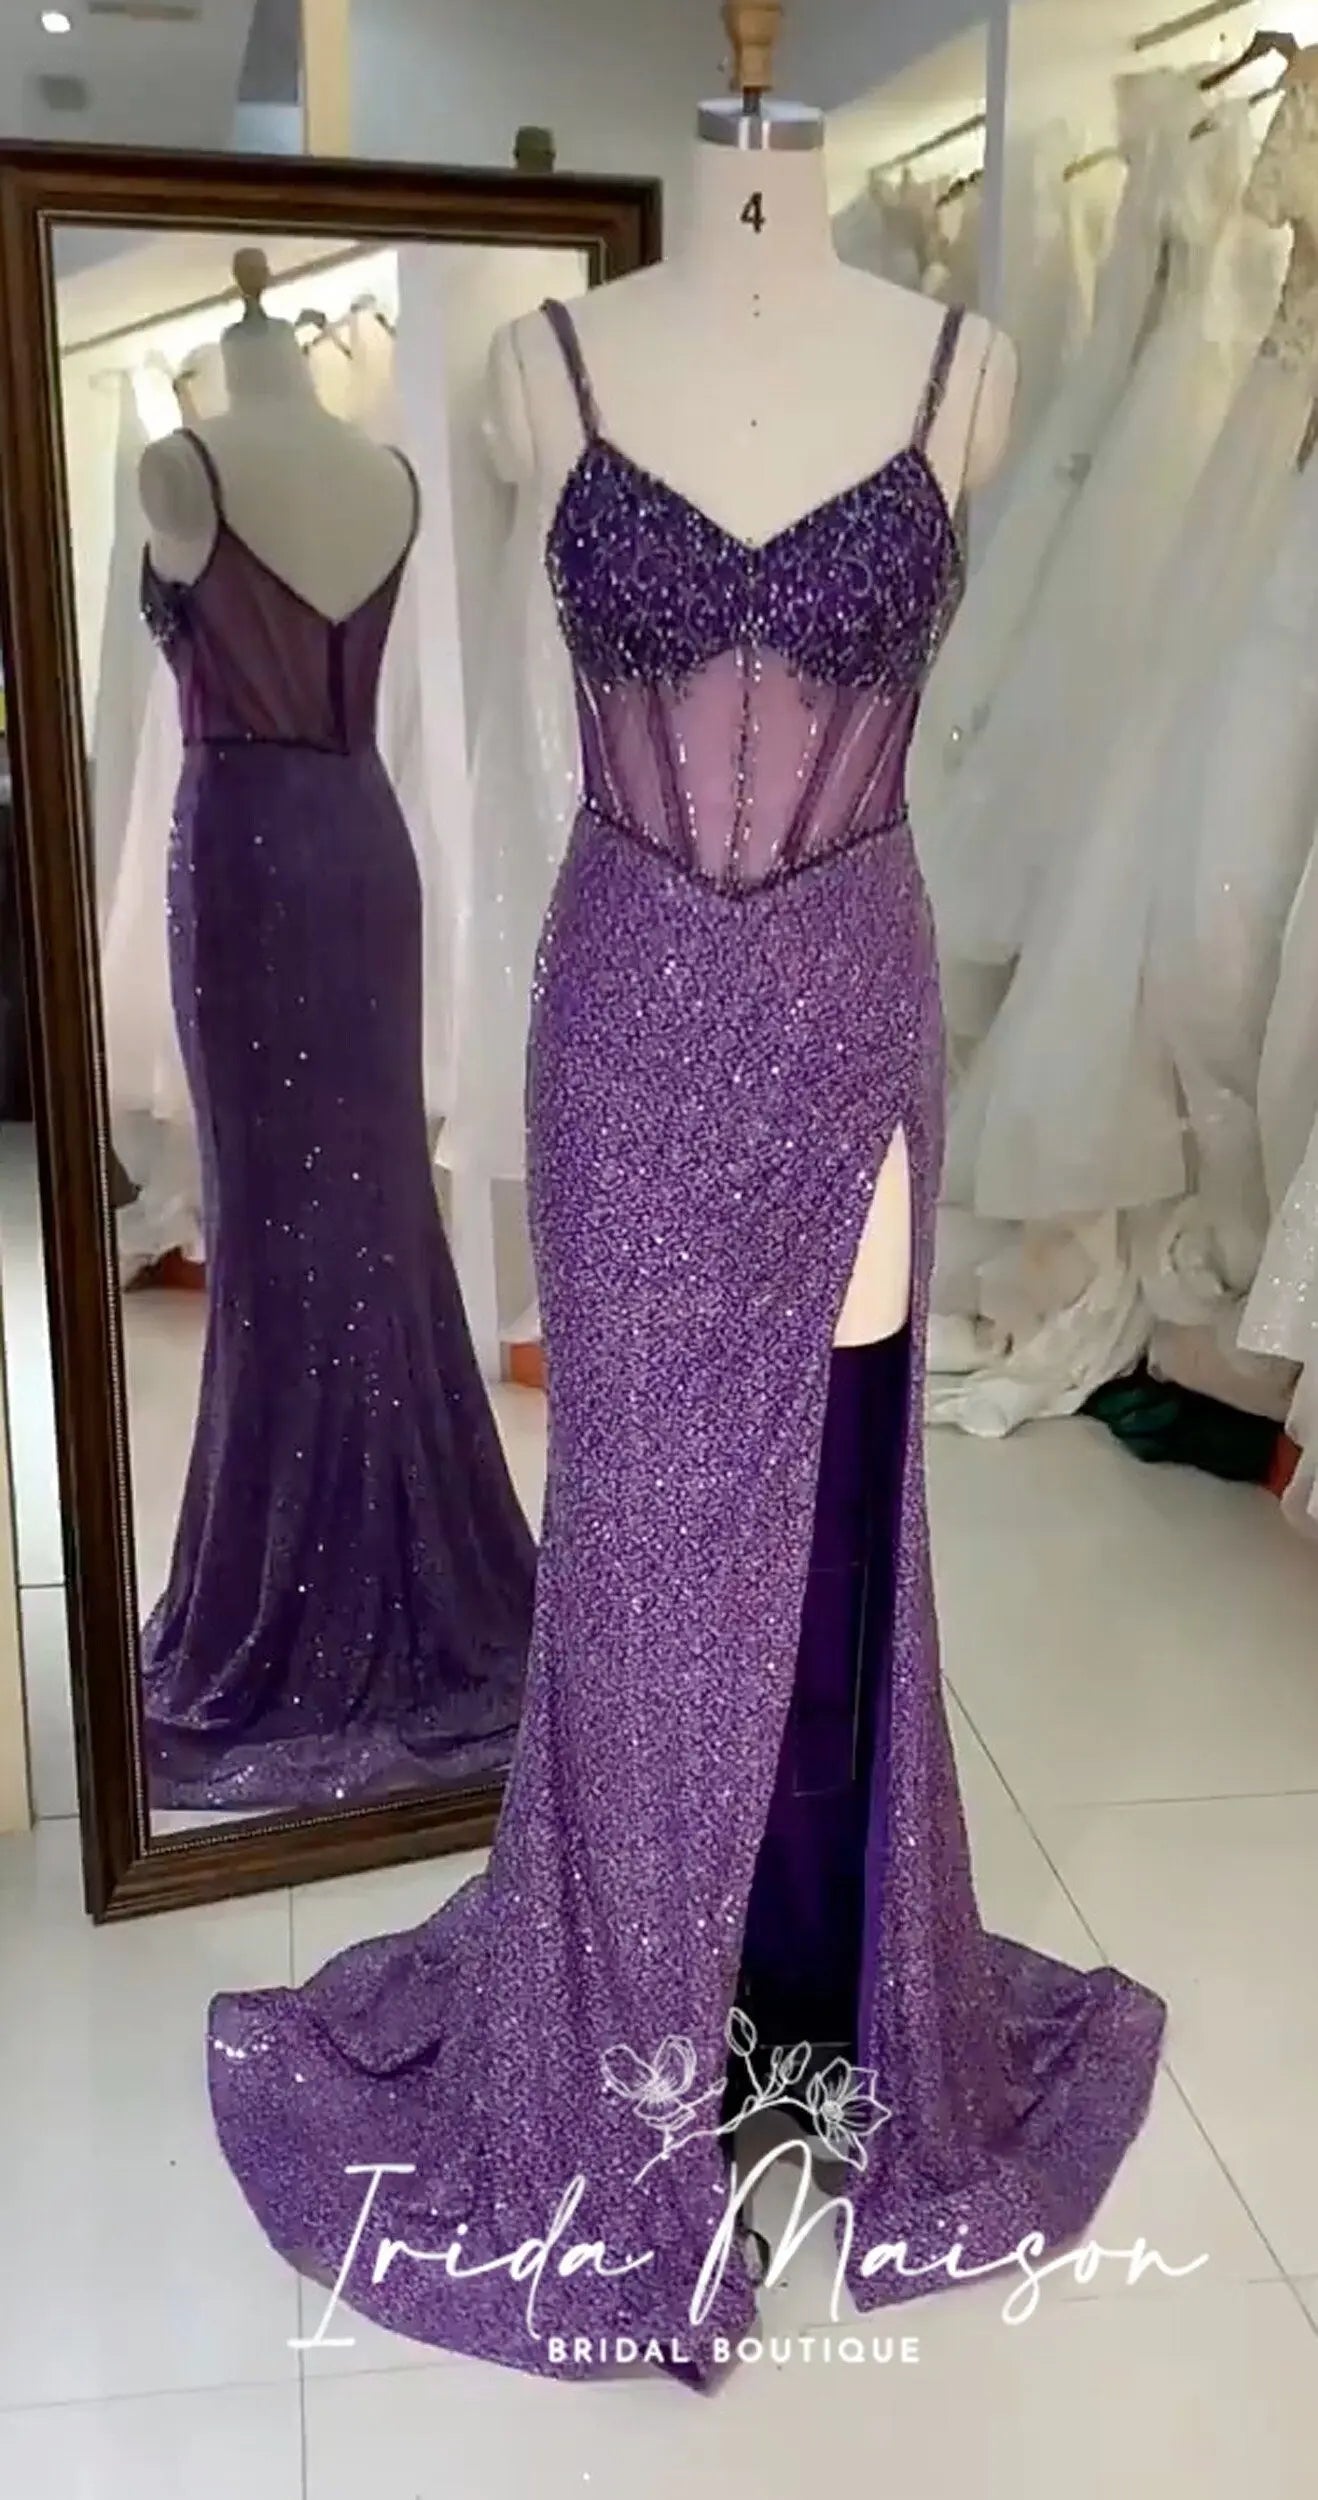 Sequin shiny high slit Prom dress, Cocktail Dress,Red Carpet Dress, Party Dress, Special Occasion Dress, Event Dress, Classy Dress